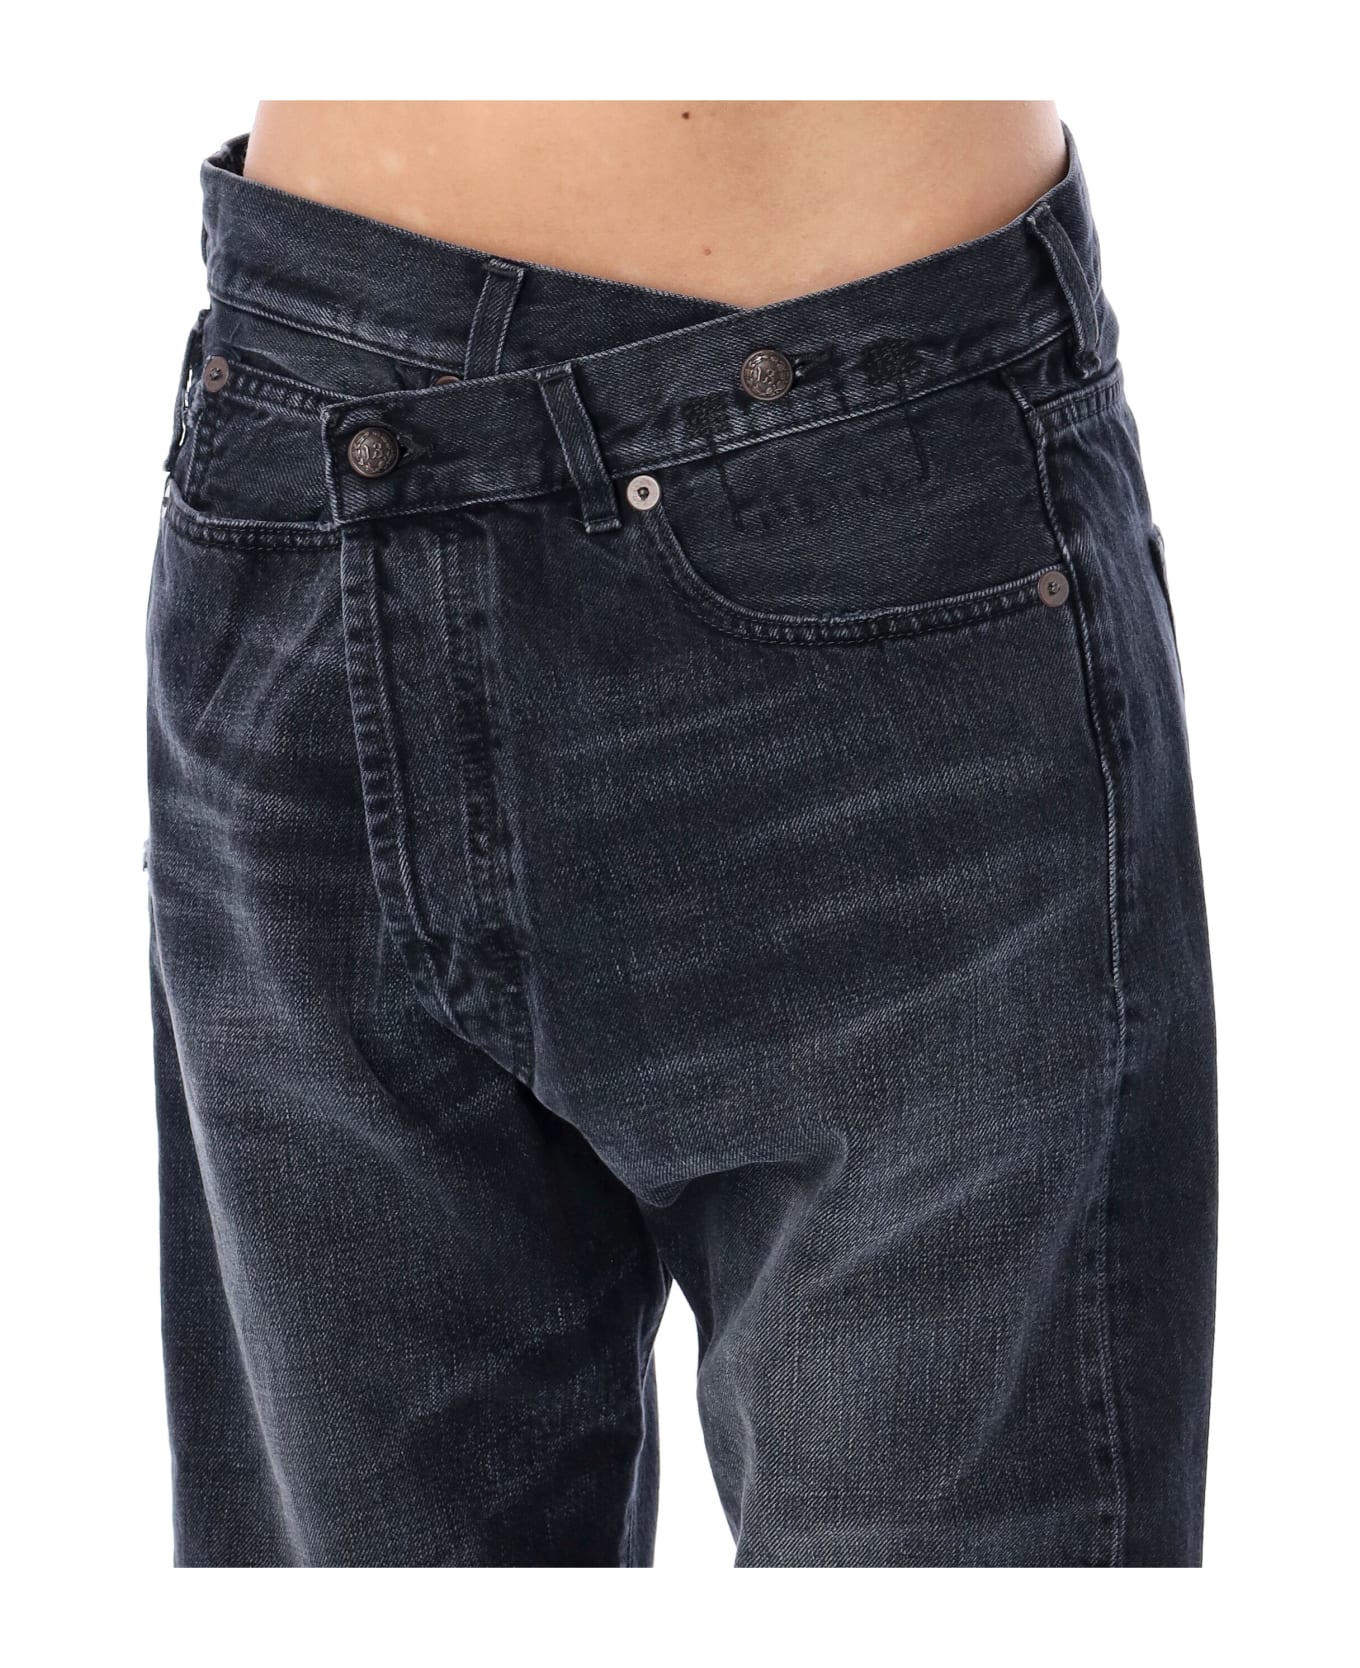 R13 Casual Jeans - JAKE BLACK デニム